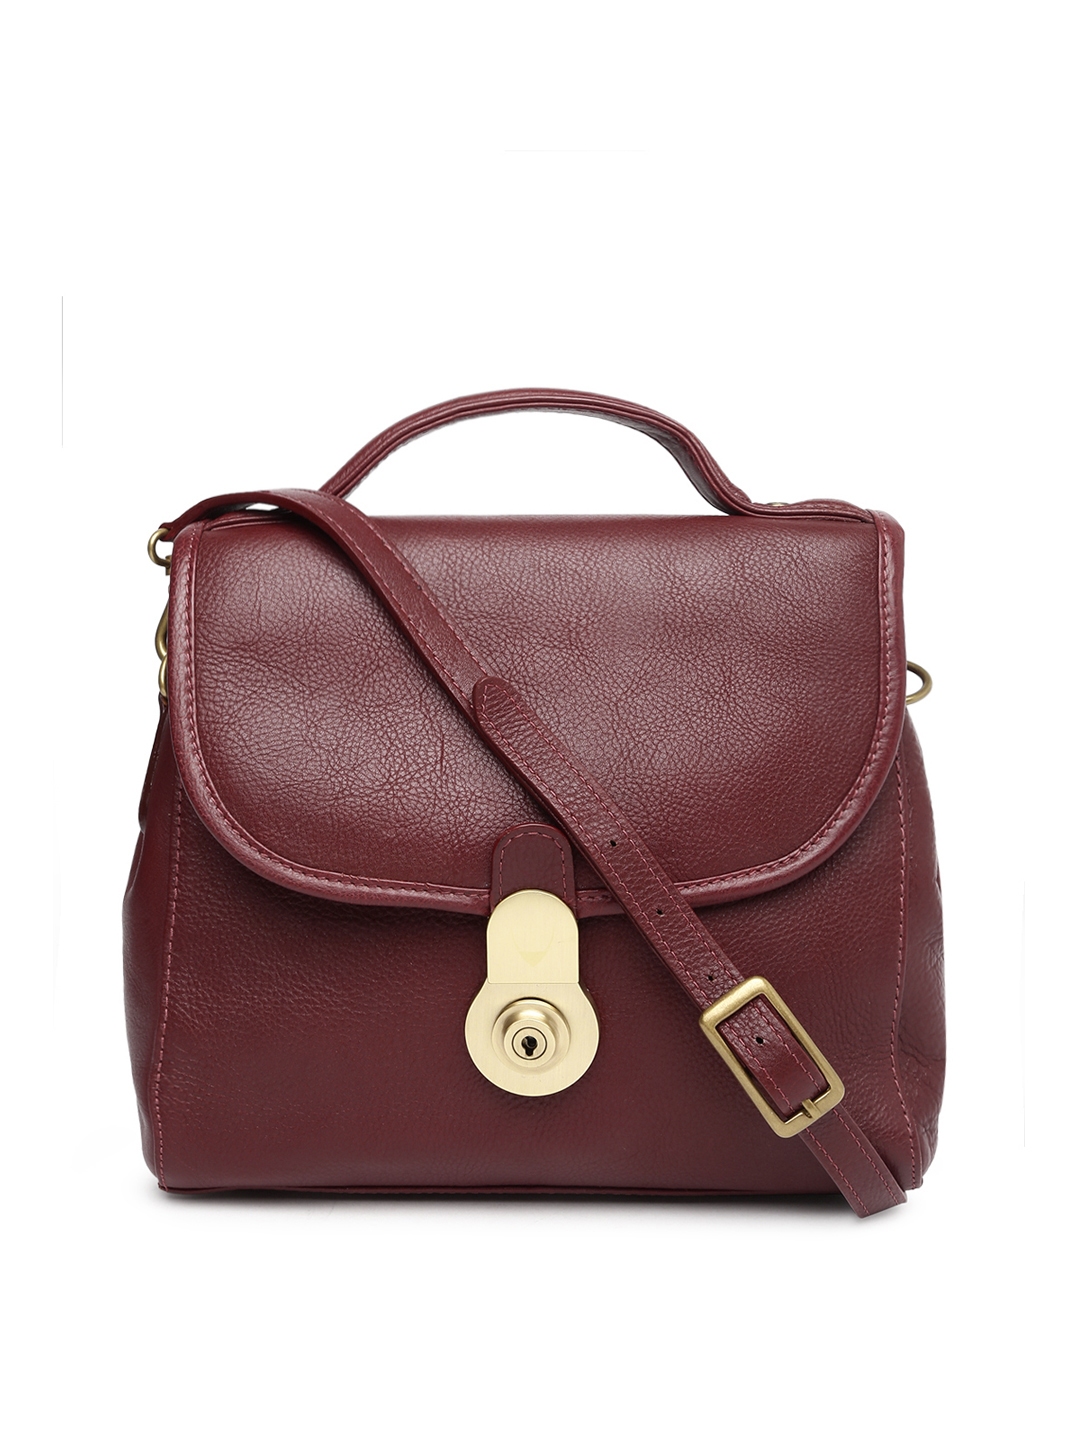 Buy Hidesign Burgundy Solid Leather Handheld Bag - Handbags for Women 2060494 | Myntra